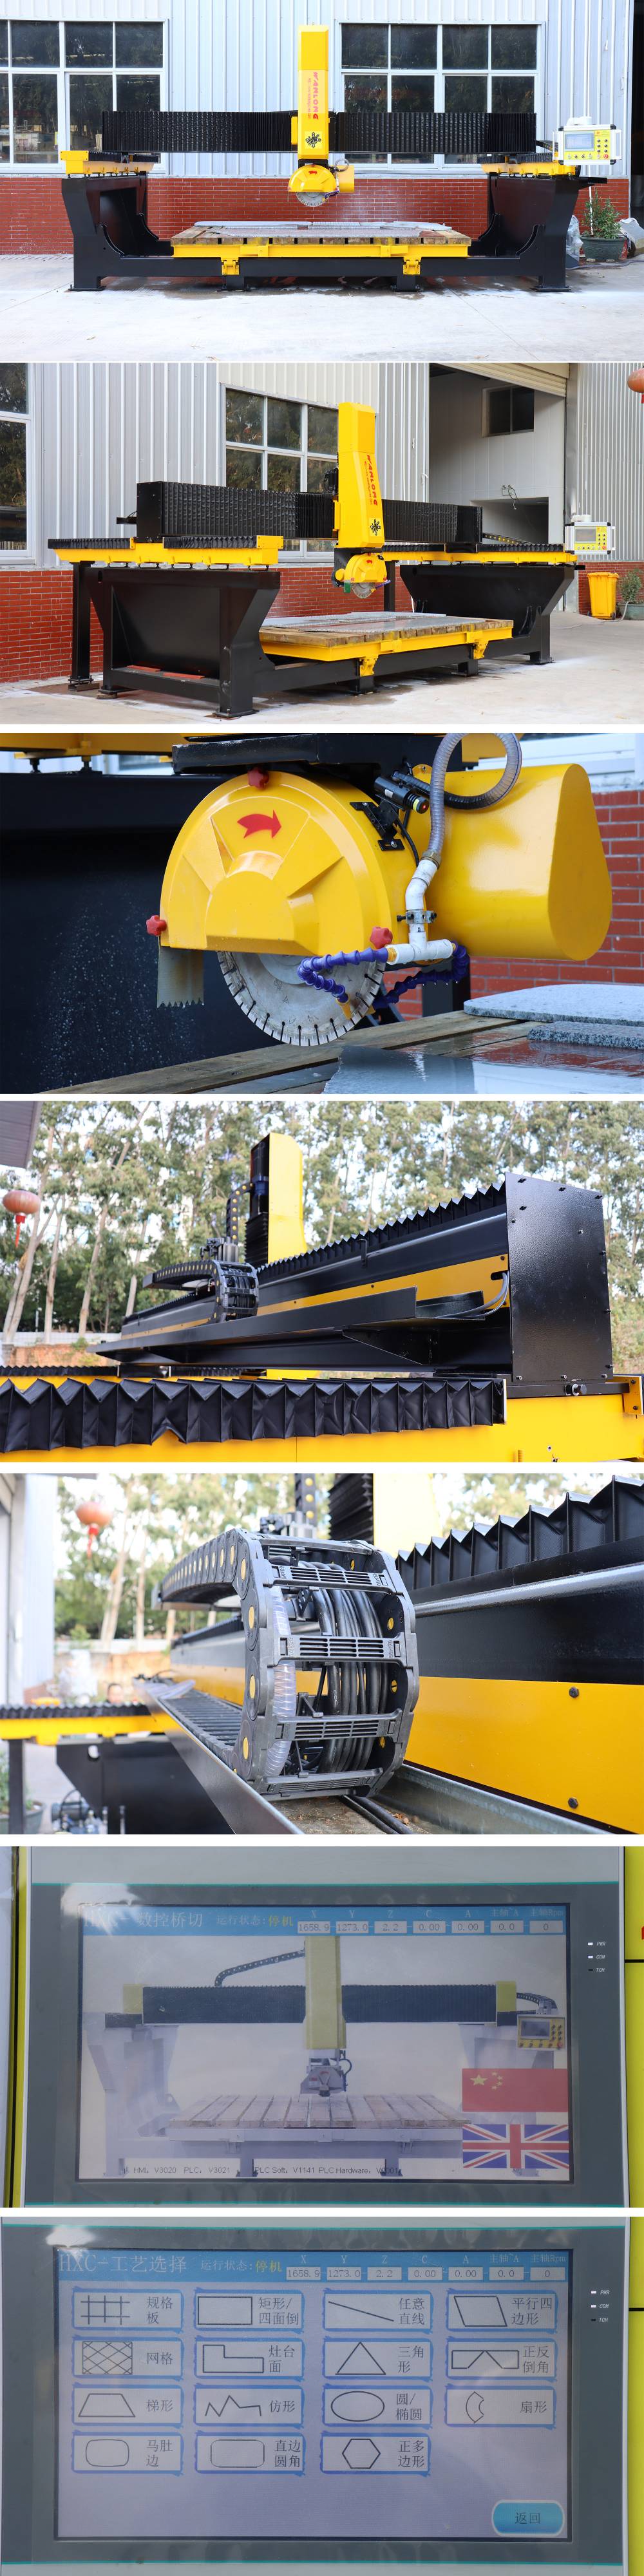 WLCNC-500 4Axis Bridge Cutting Machine - Cutting Machinery - 2